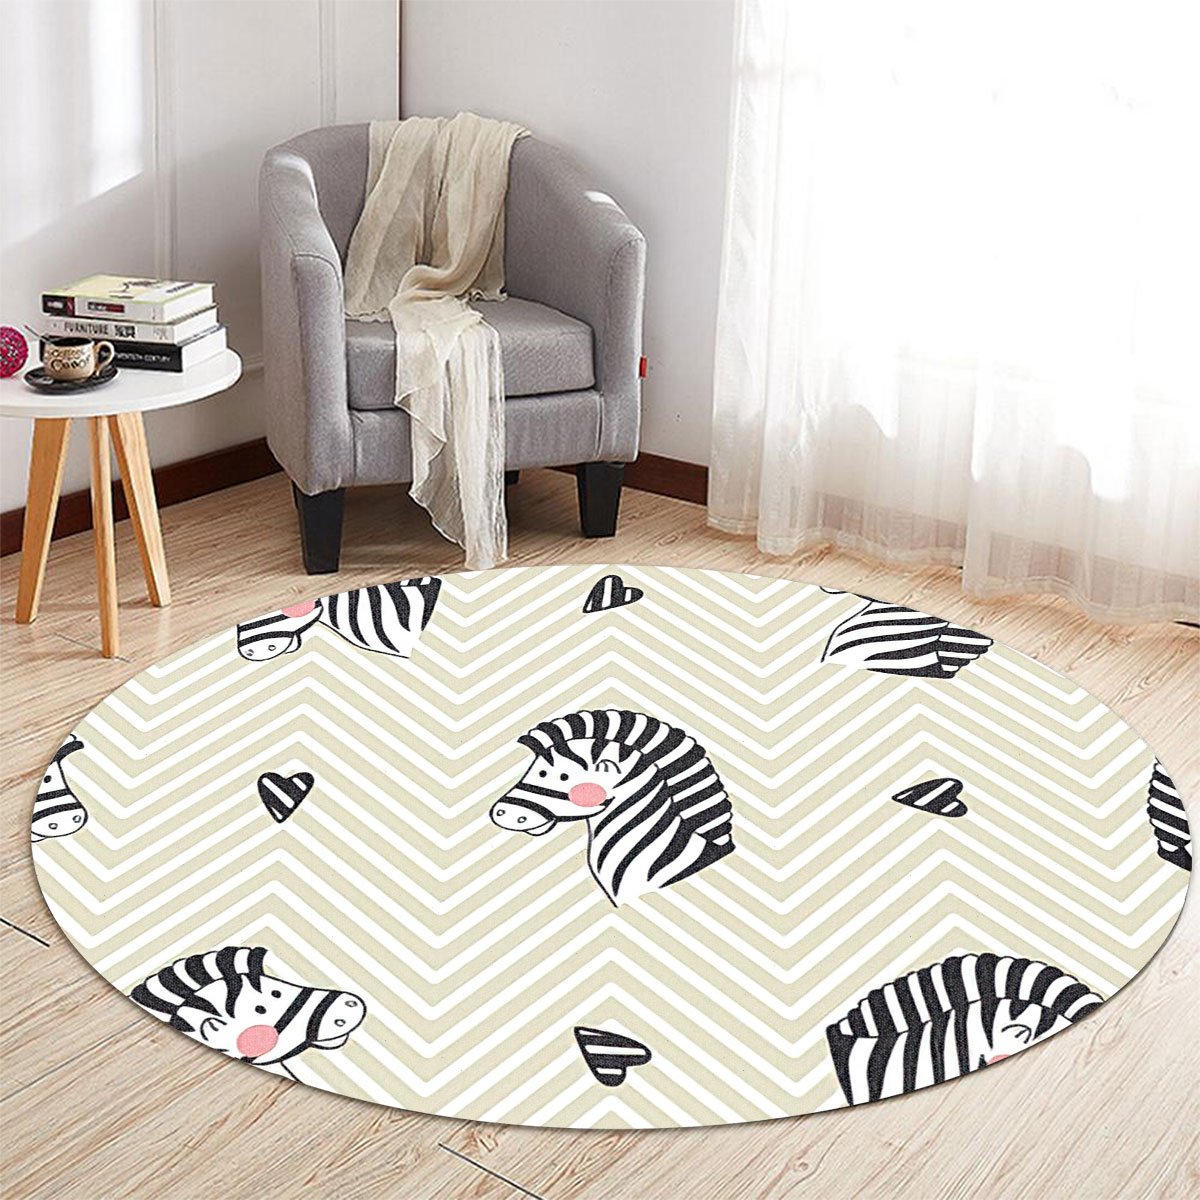 Zebra Little Heart Round Carpet 6